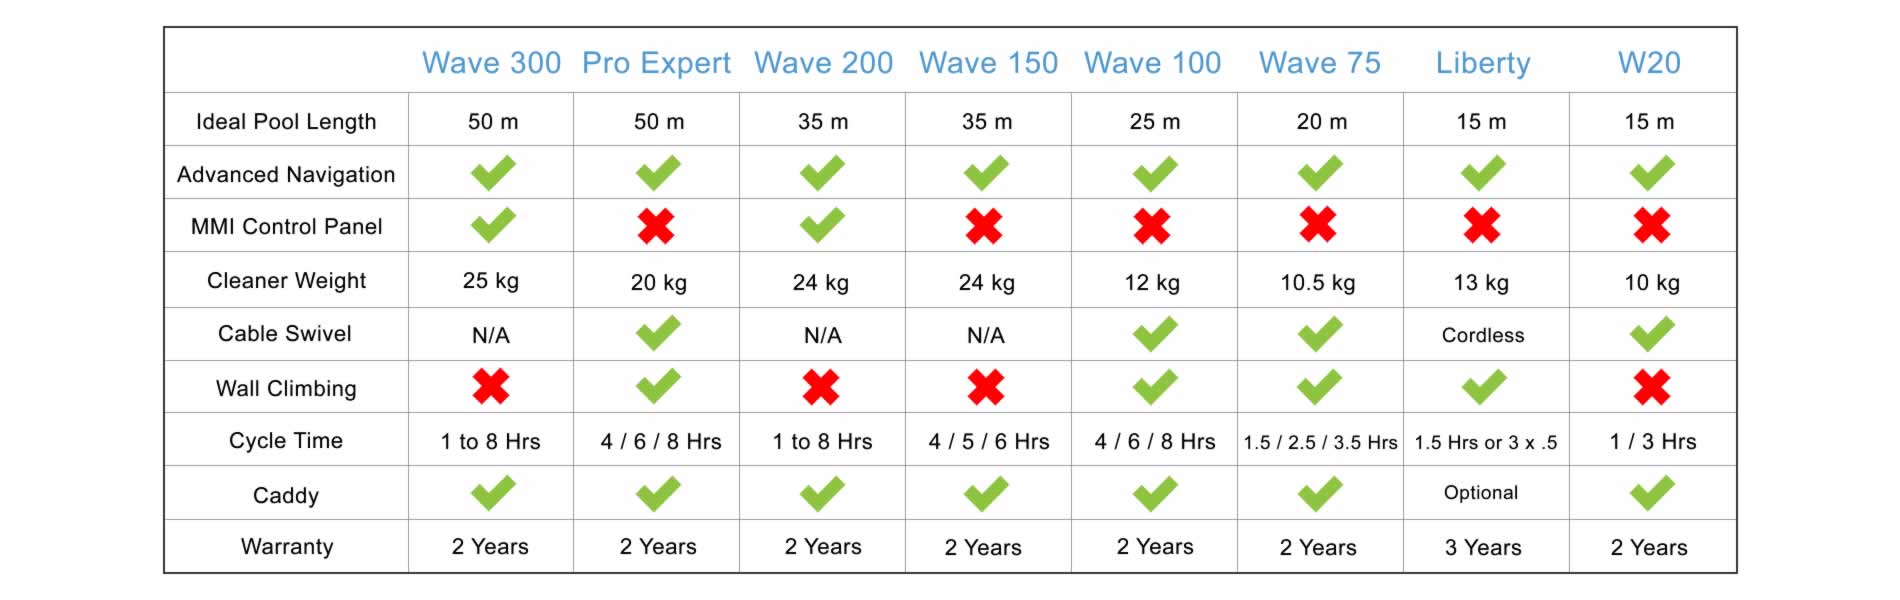 dolphin wave 100 comparison